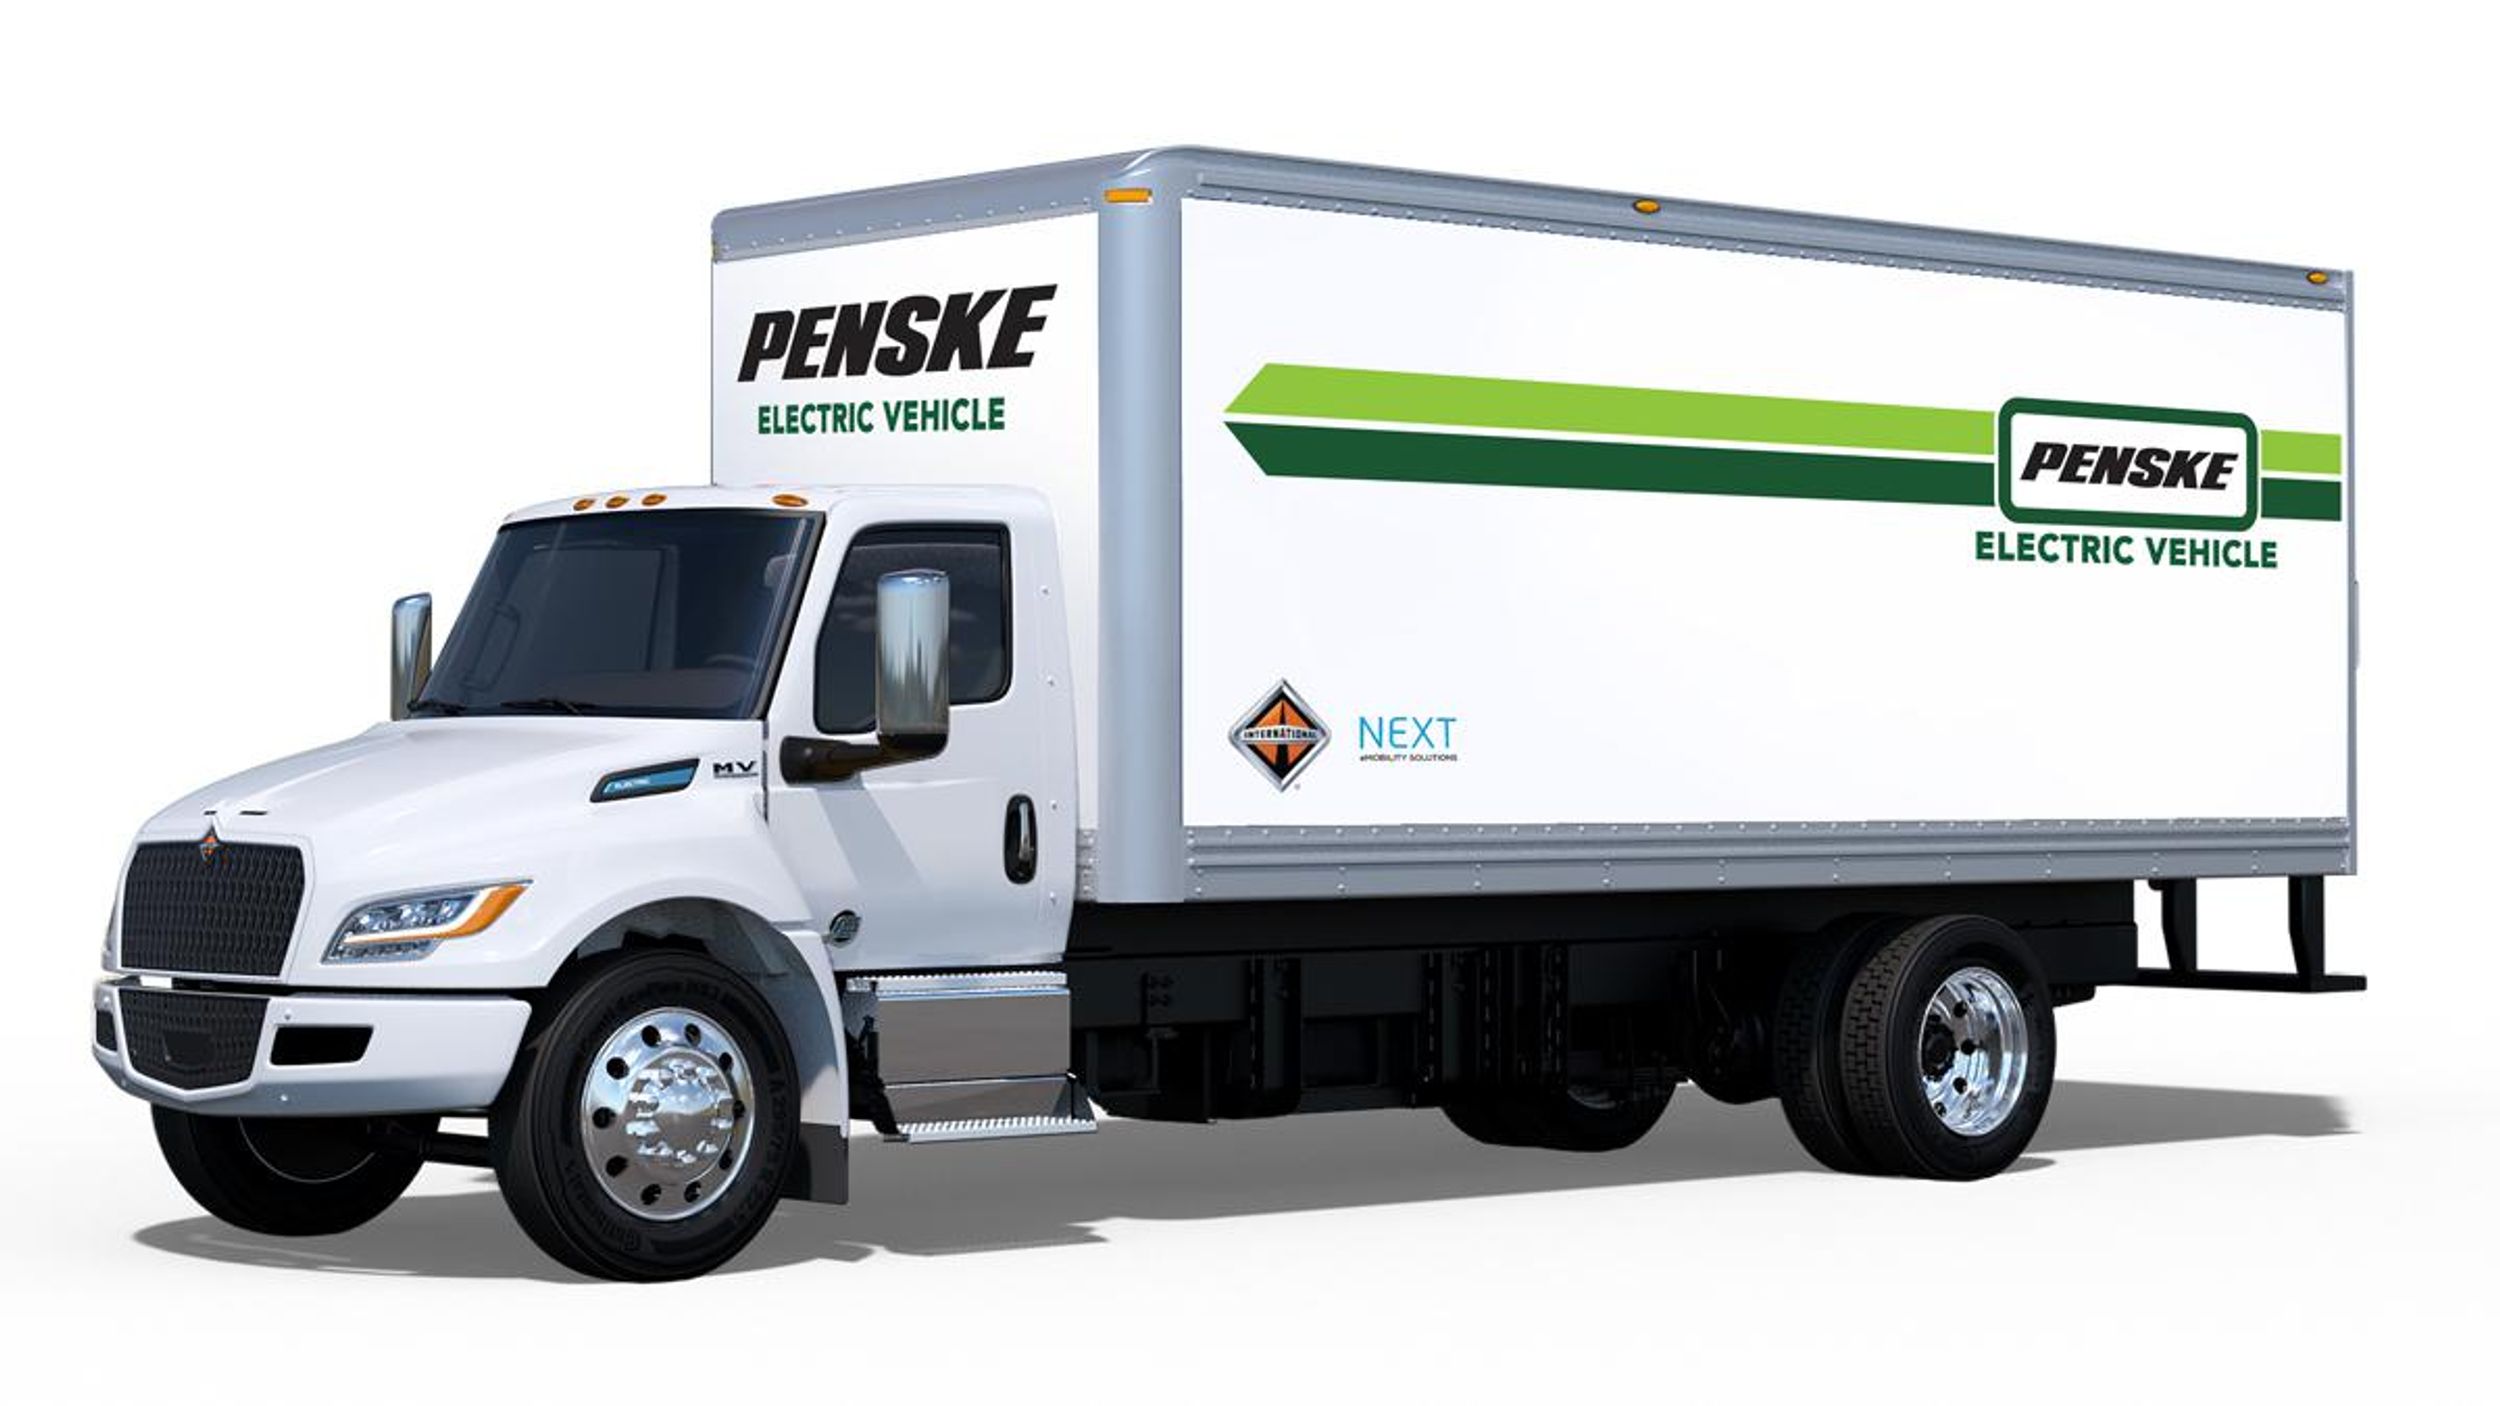 Penske Electric Vehicle